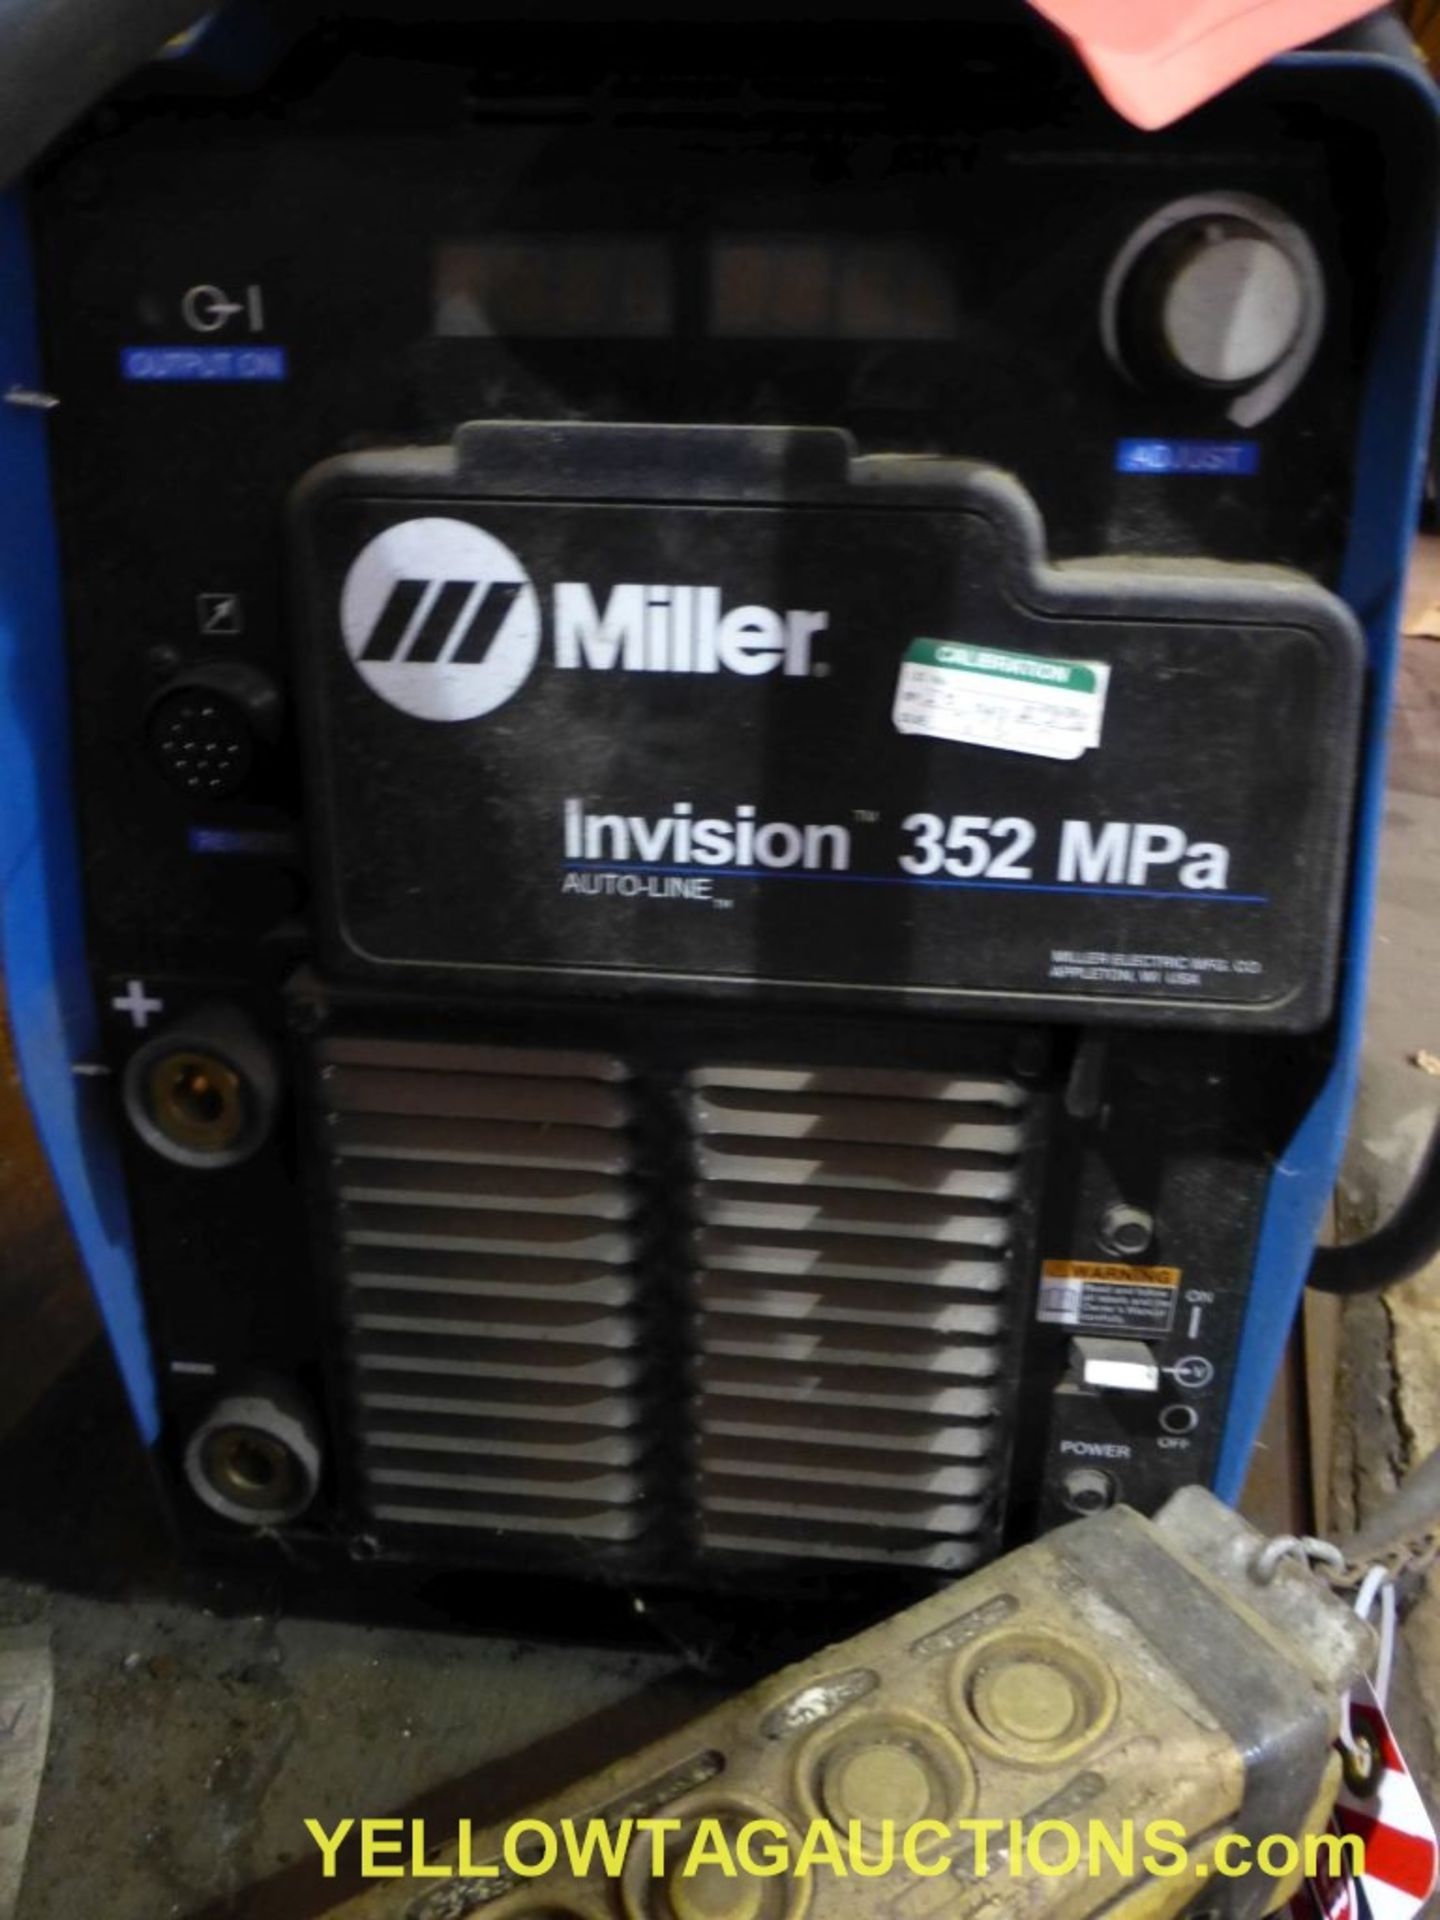 Miller Autolite Invision 352 MPA Plasma Cutter - Image 2 of 9